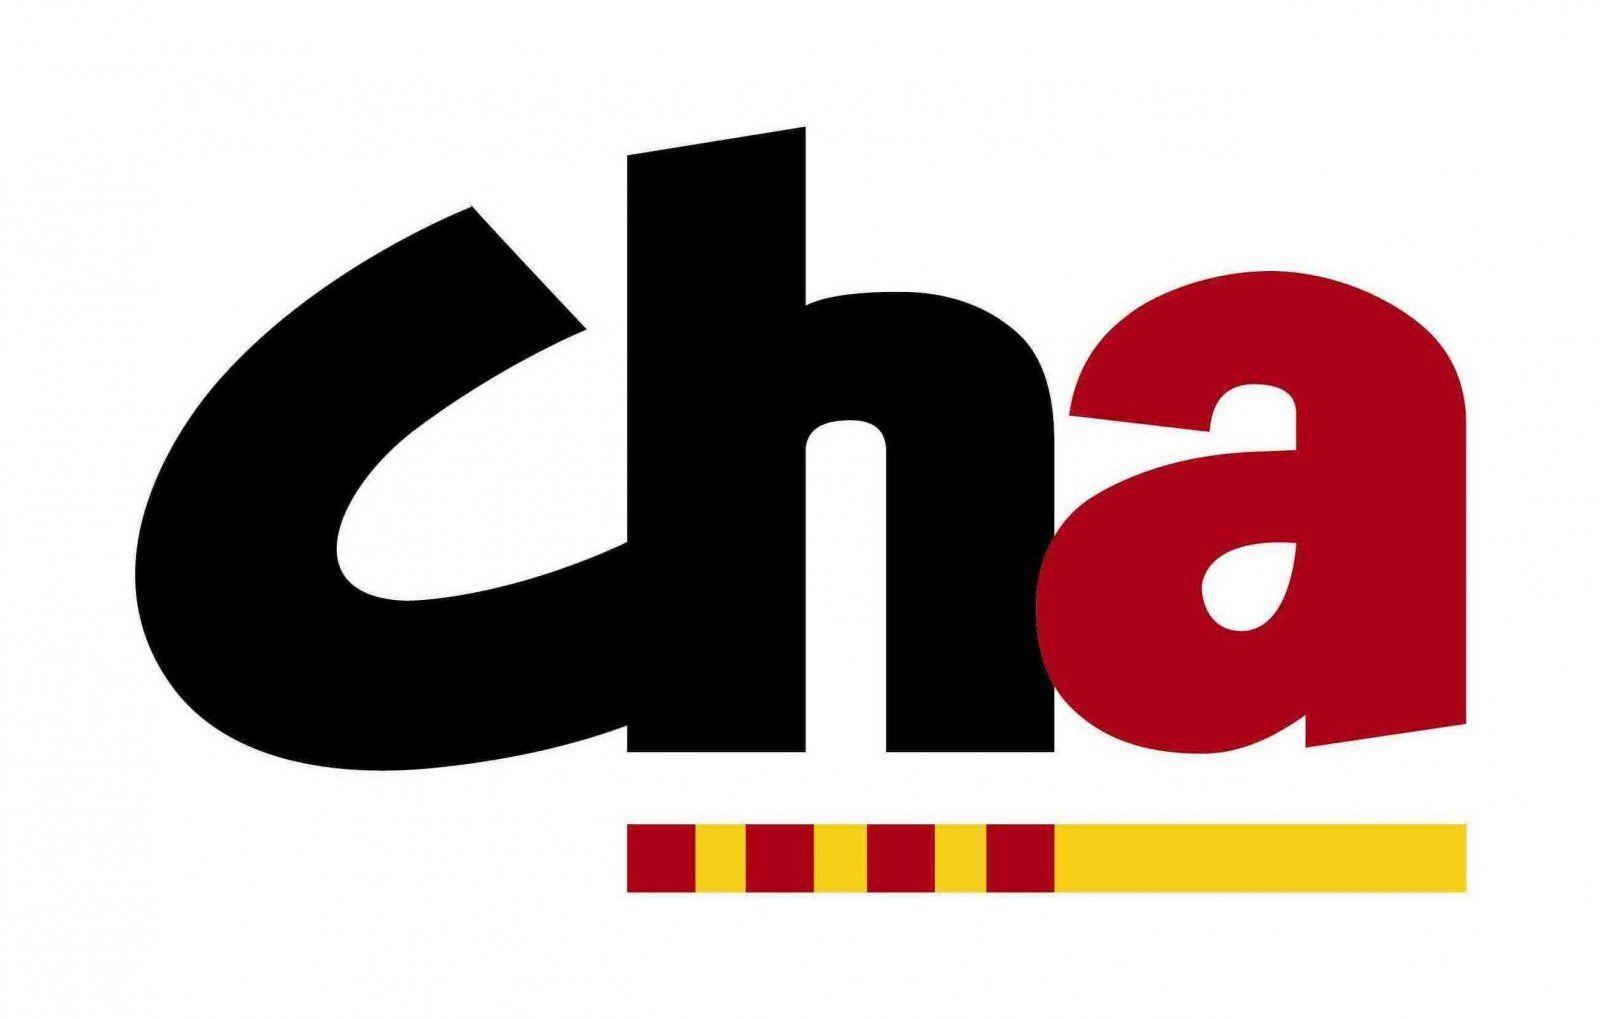 Cha Logo - File:Logo-cha.jpg - Wikimedia Commons